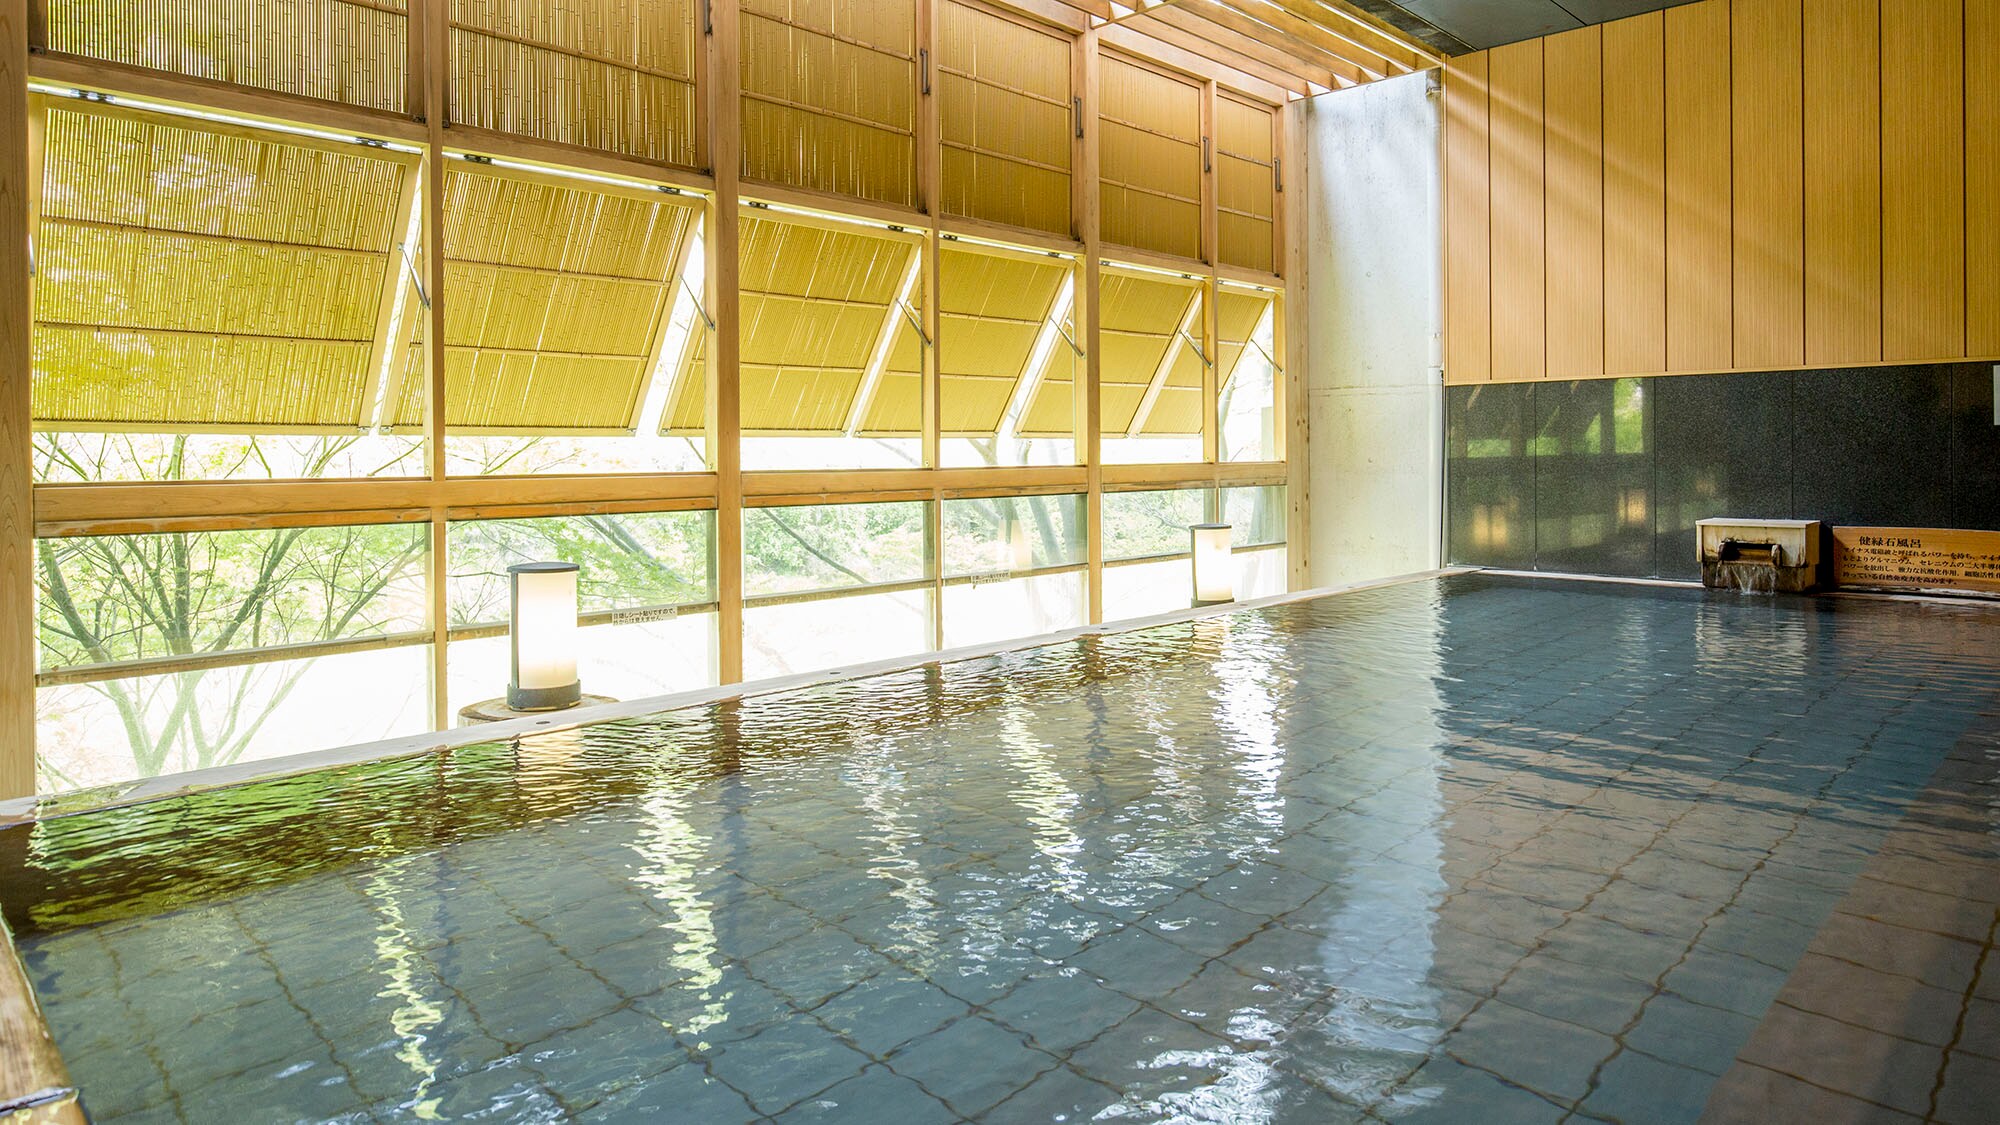 ■ Wooden large communal bath "Keikoku no Yu" Kenryoku stone bath